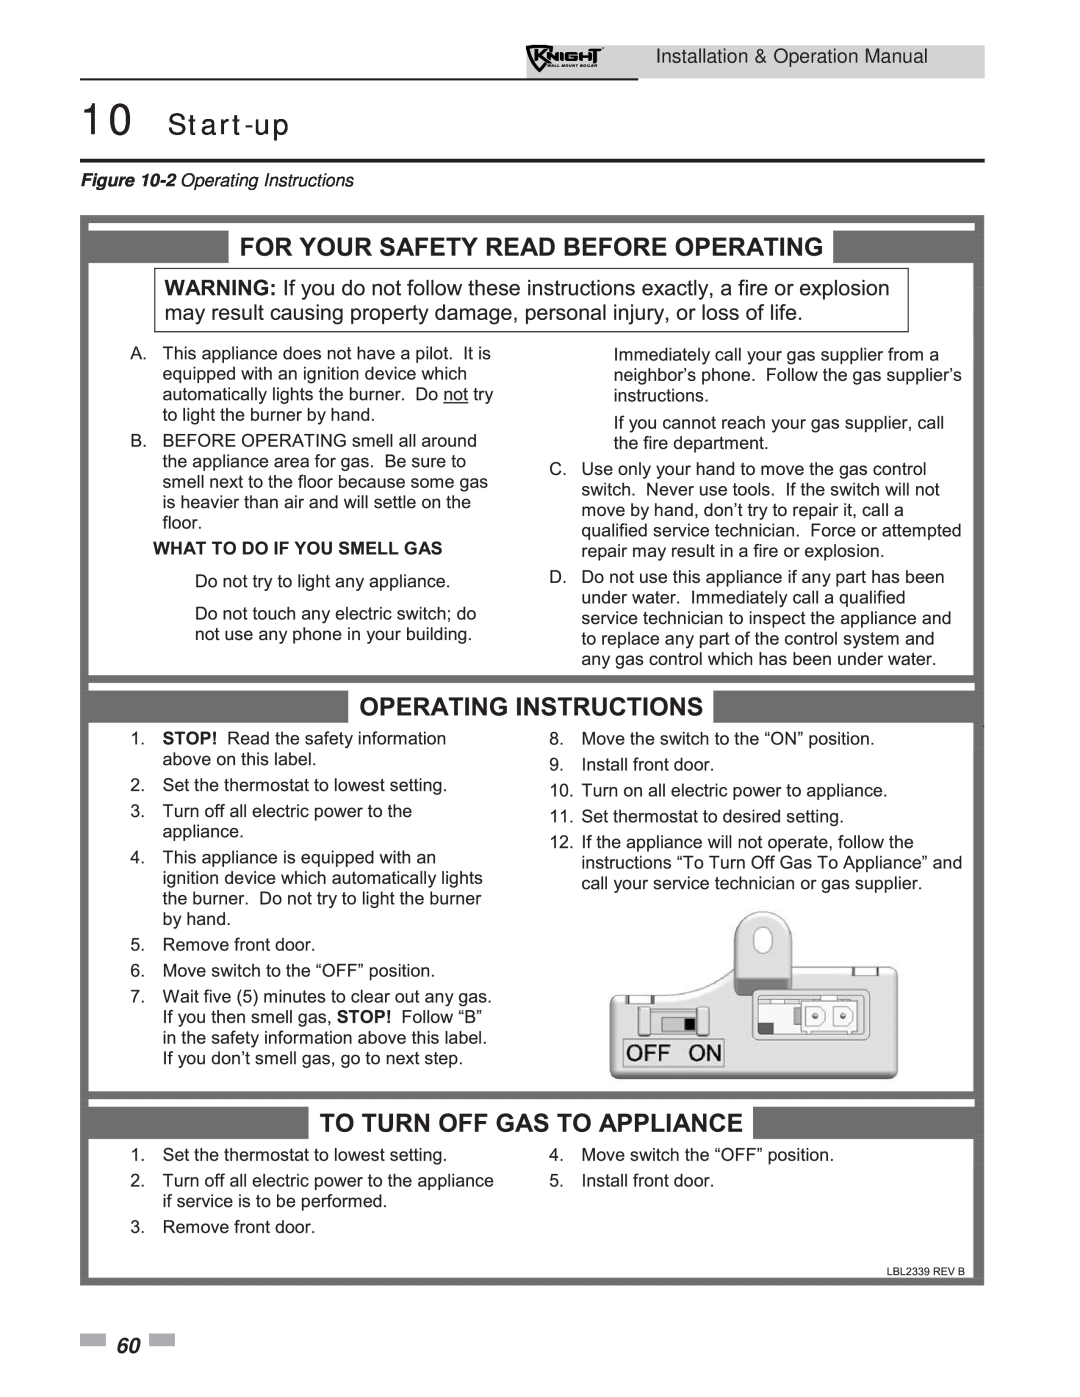 Lochinvar 51-211 operation manual 2 Operating Instructions, Start-up, Installation & Operation Manual 